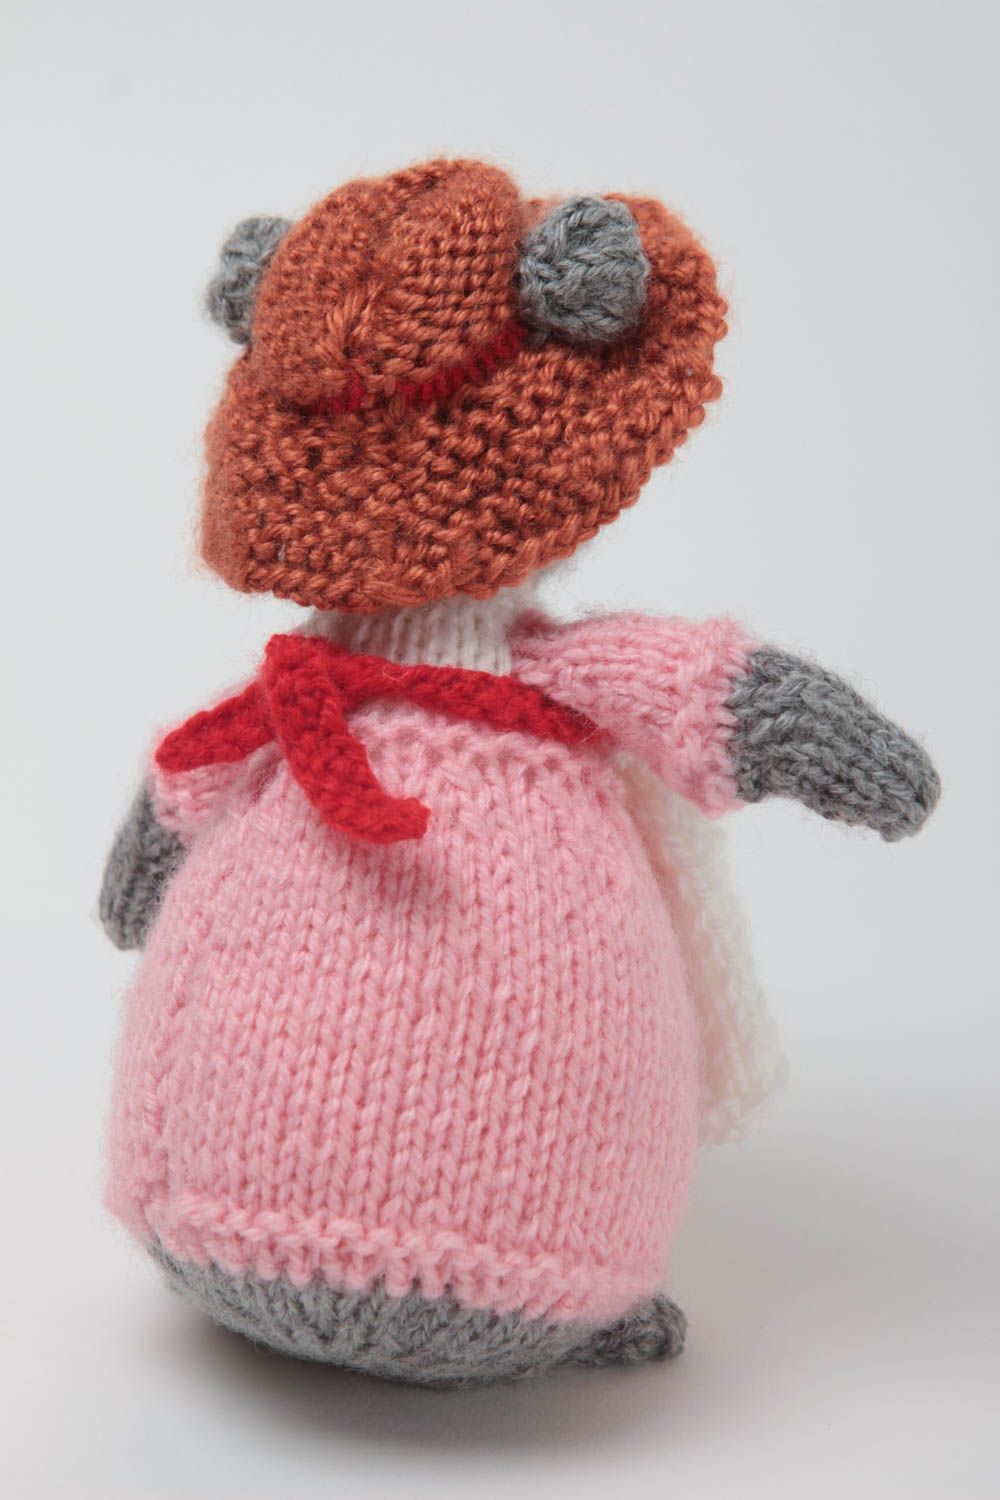 Handmade designer toy knitted soft toy for children decorative toy interior idea photo 4